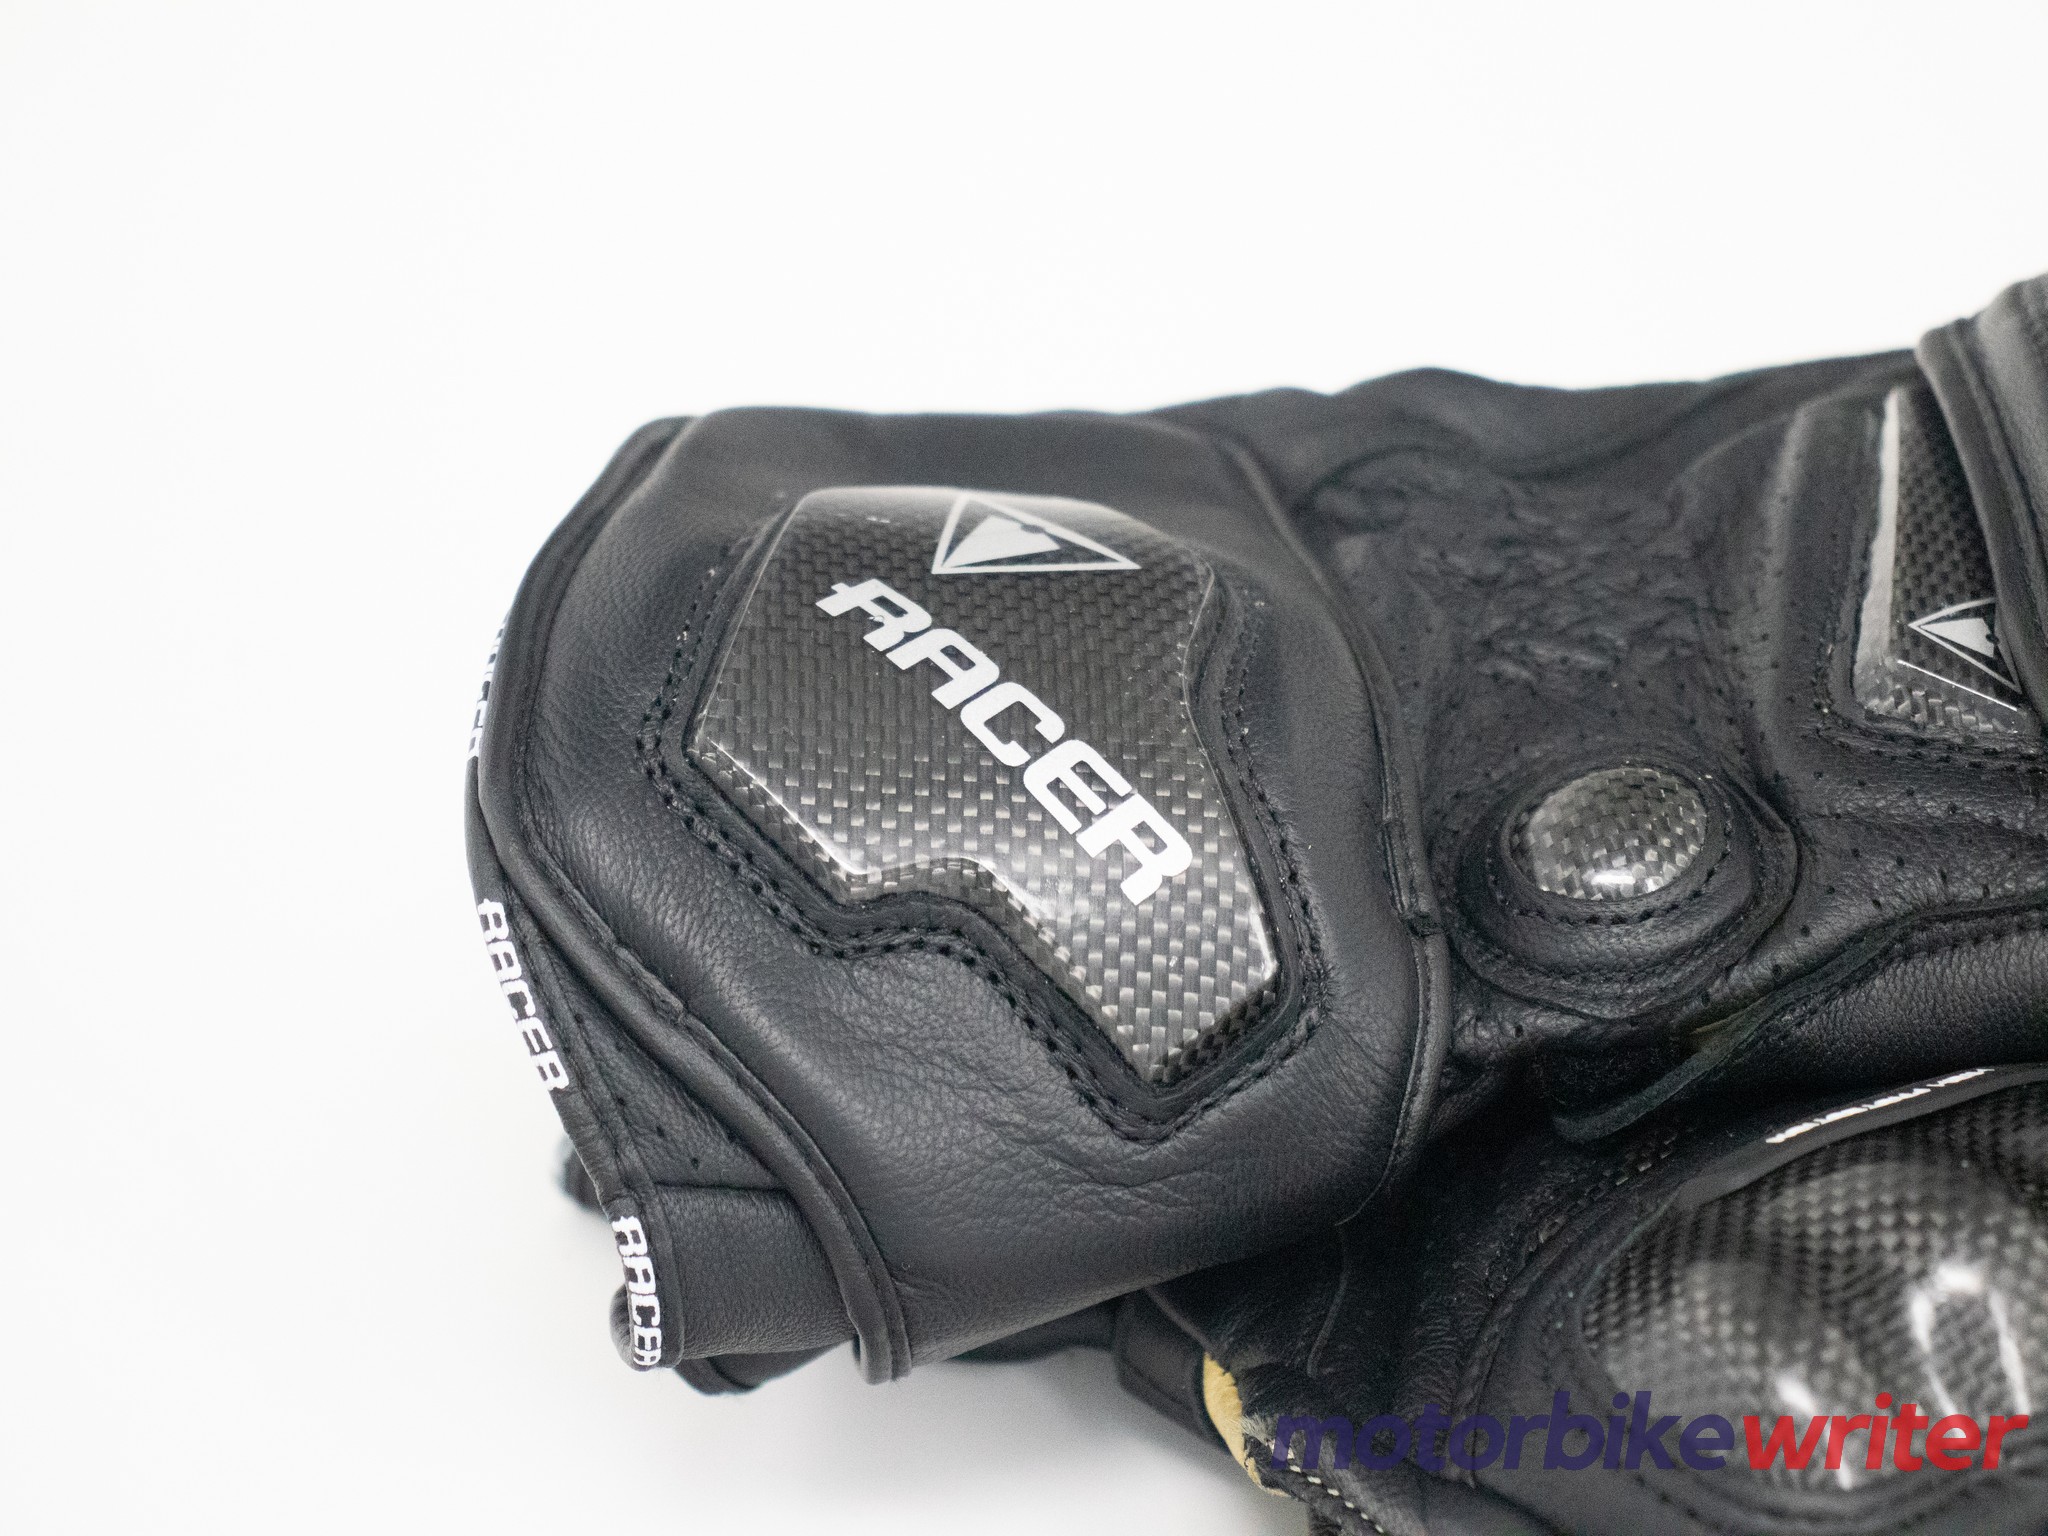 Closeup of carbon fiber and Racer logo on glove cuff